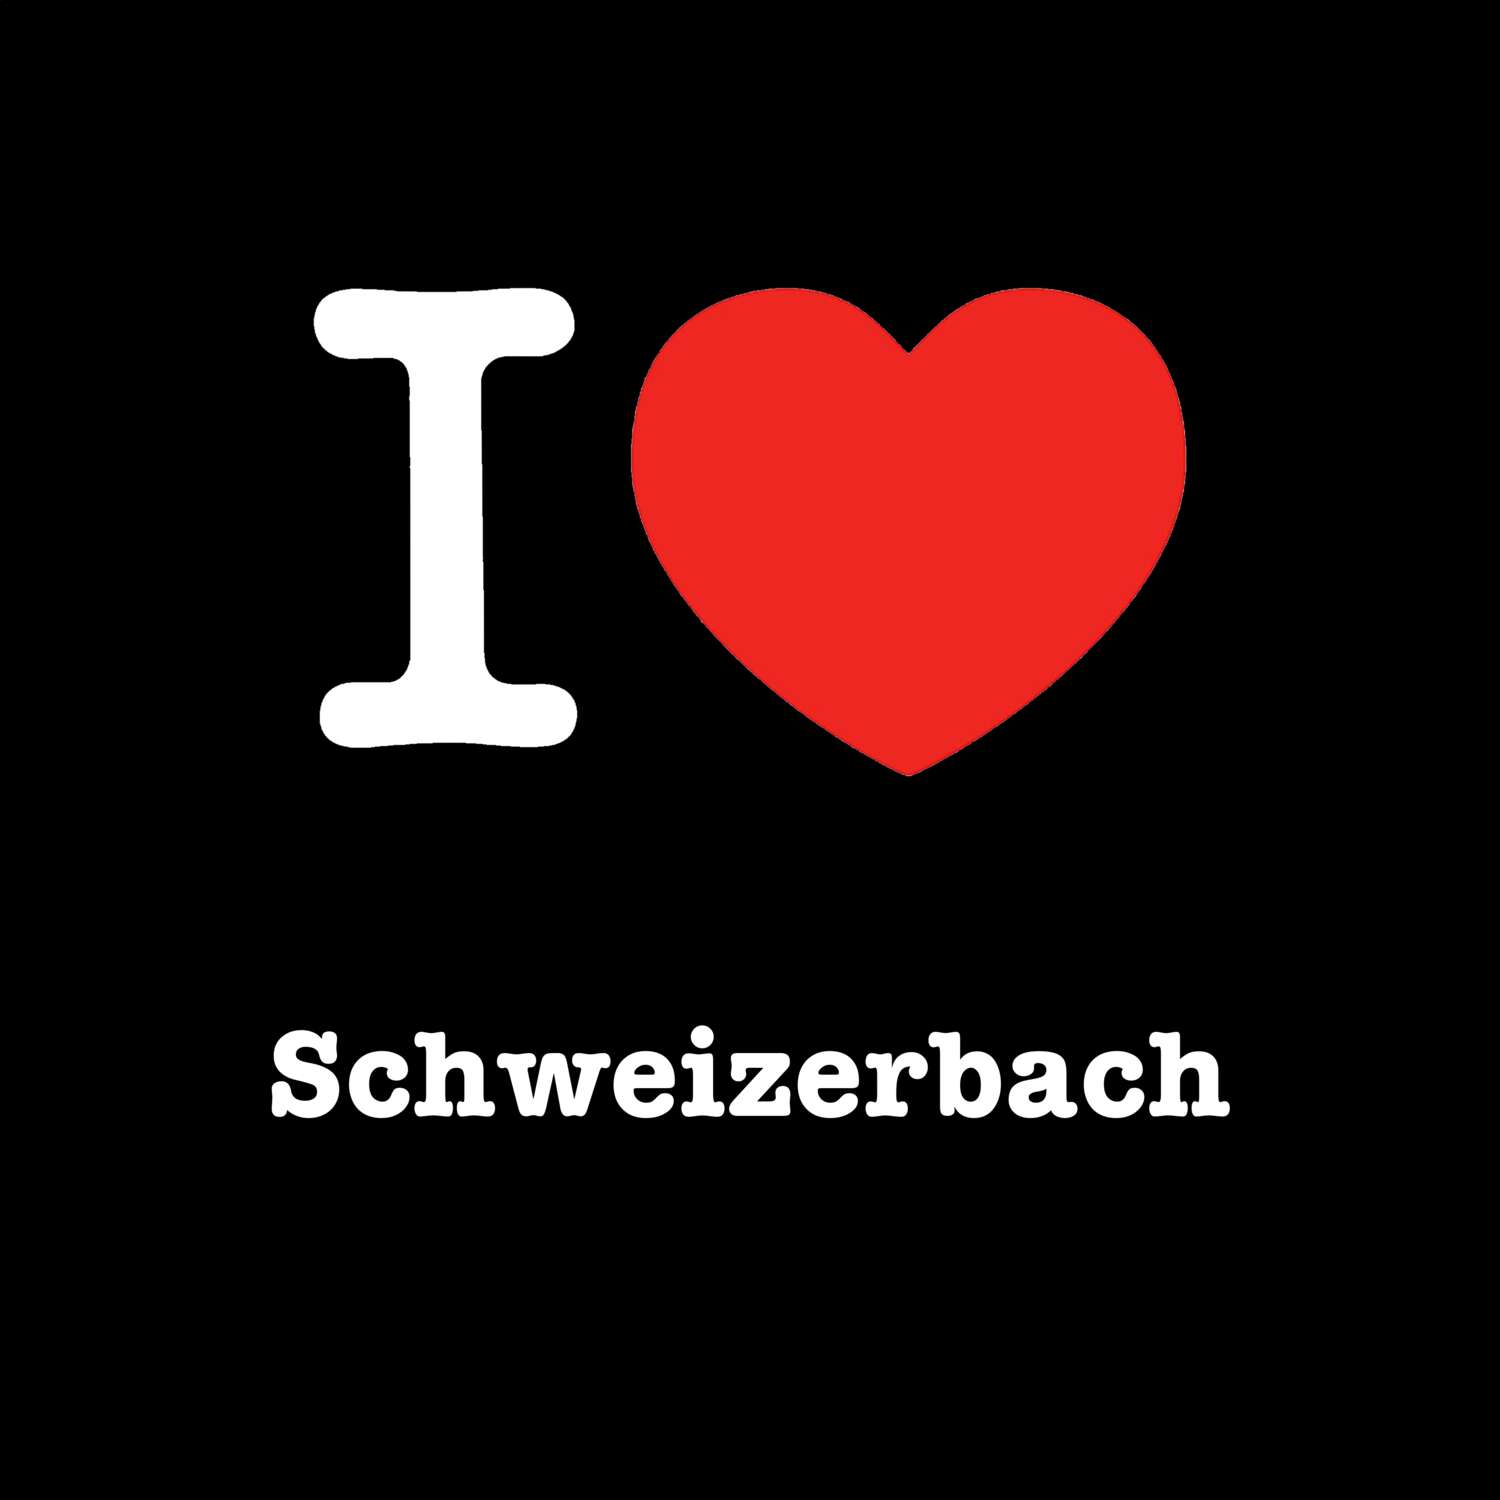 Schweizerbach T-Shirt »I love«